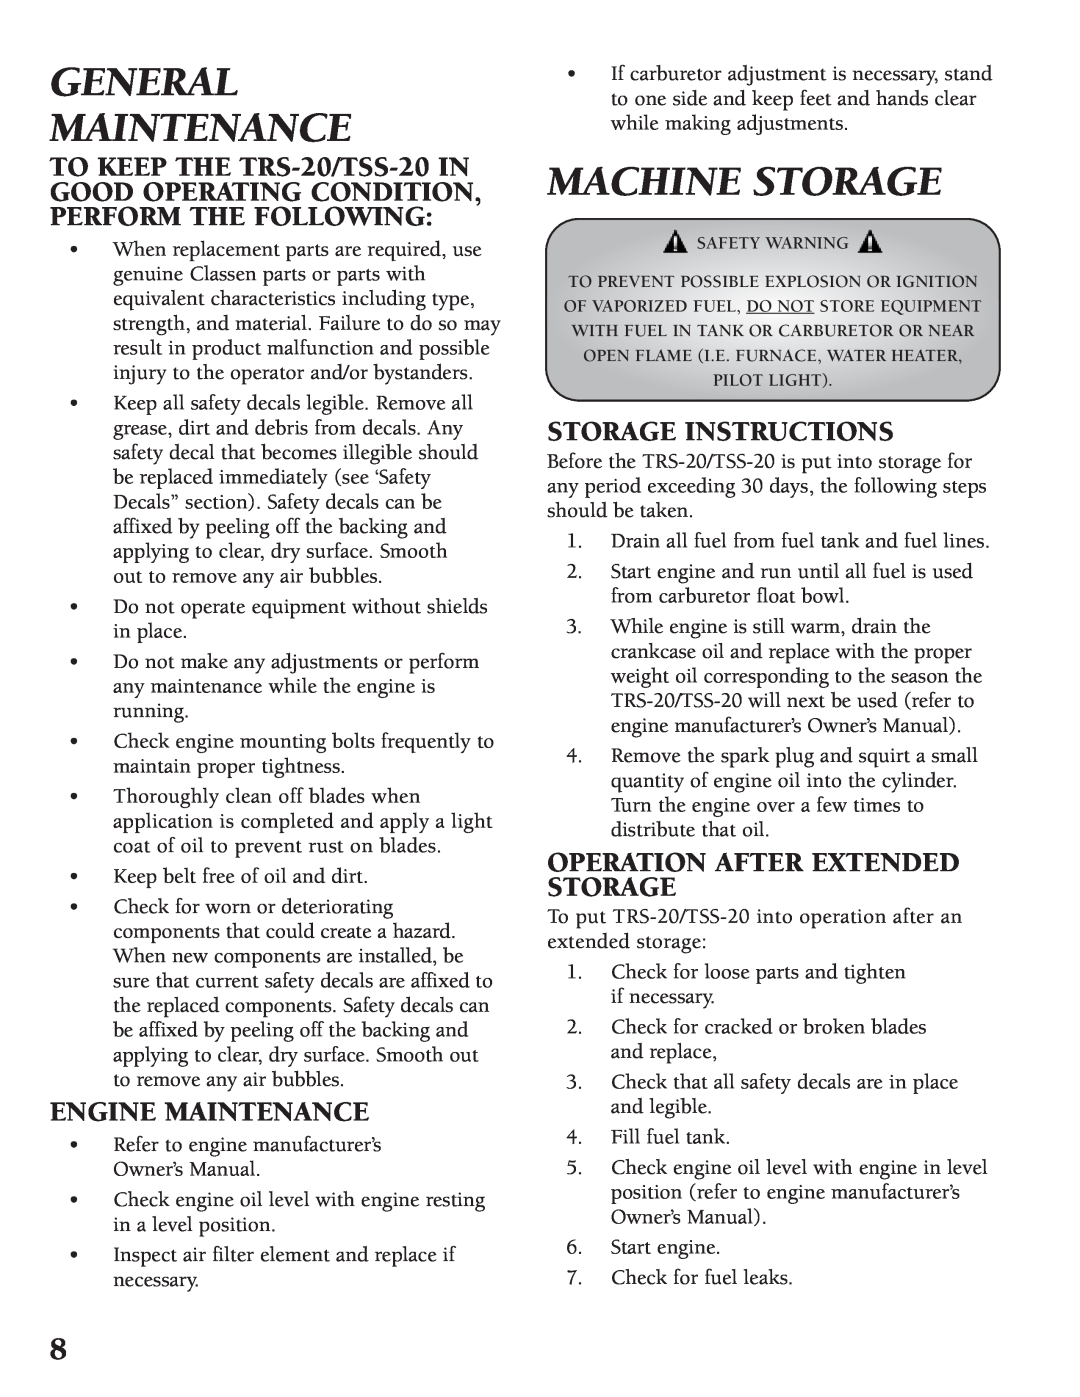 Little Wonder TRS-20, TSS-20 manual General Maintenance, Machine Storage, Engine Maintenance, Storage Instructions 